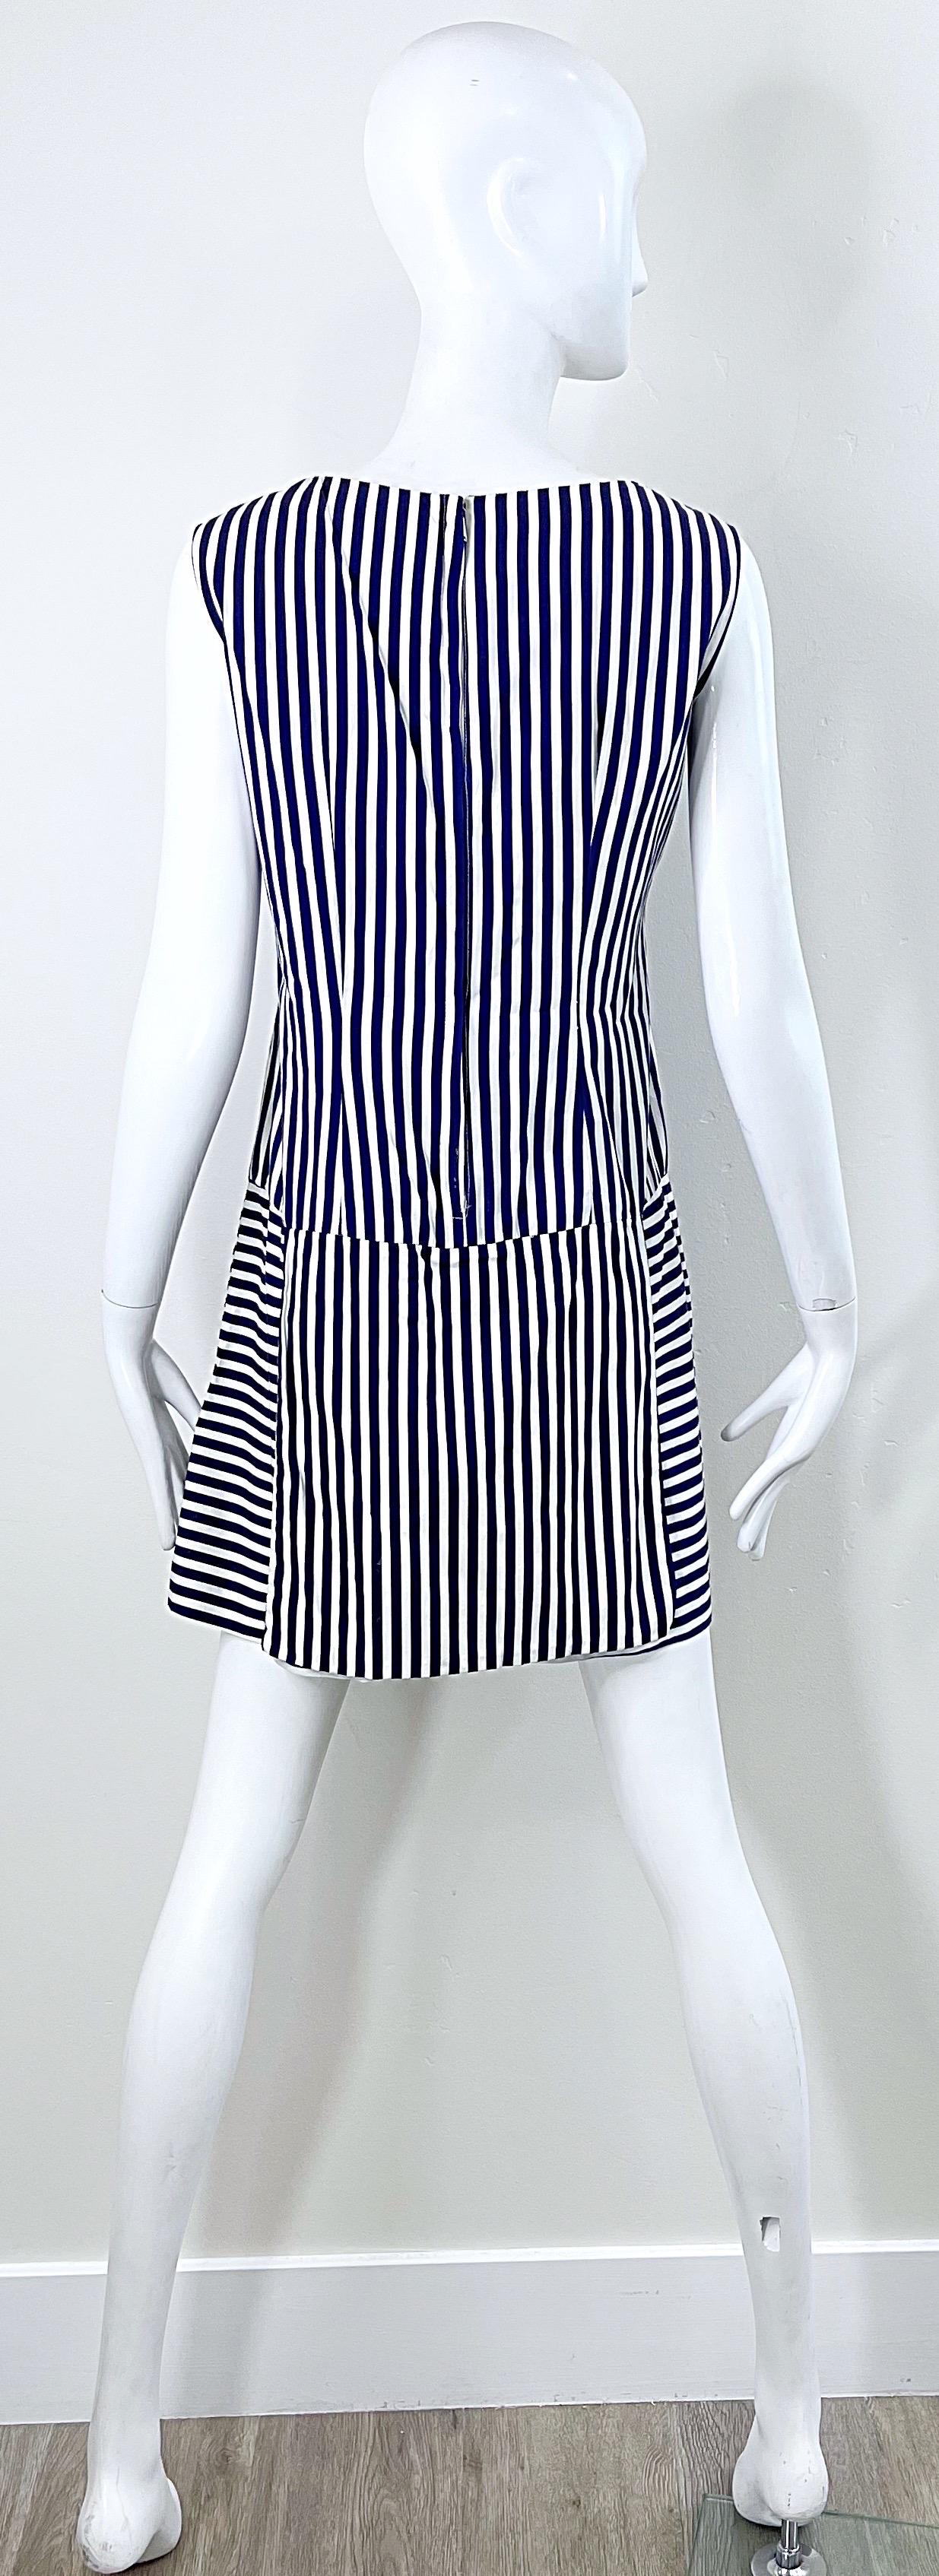 Women's 1960s Romper Large Size Navy + White Striped Cotton Vintage 60s Skort Dress For Sale